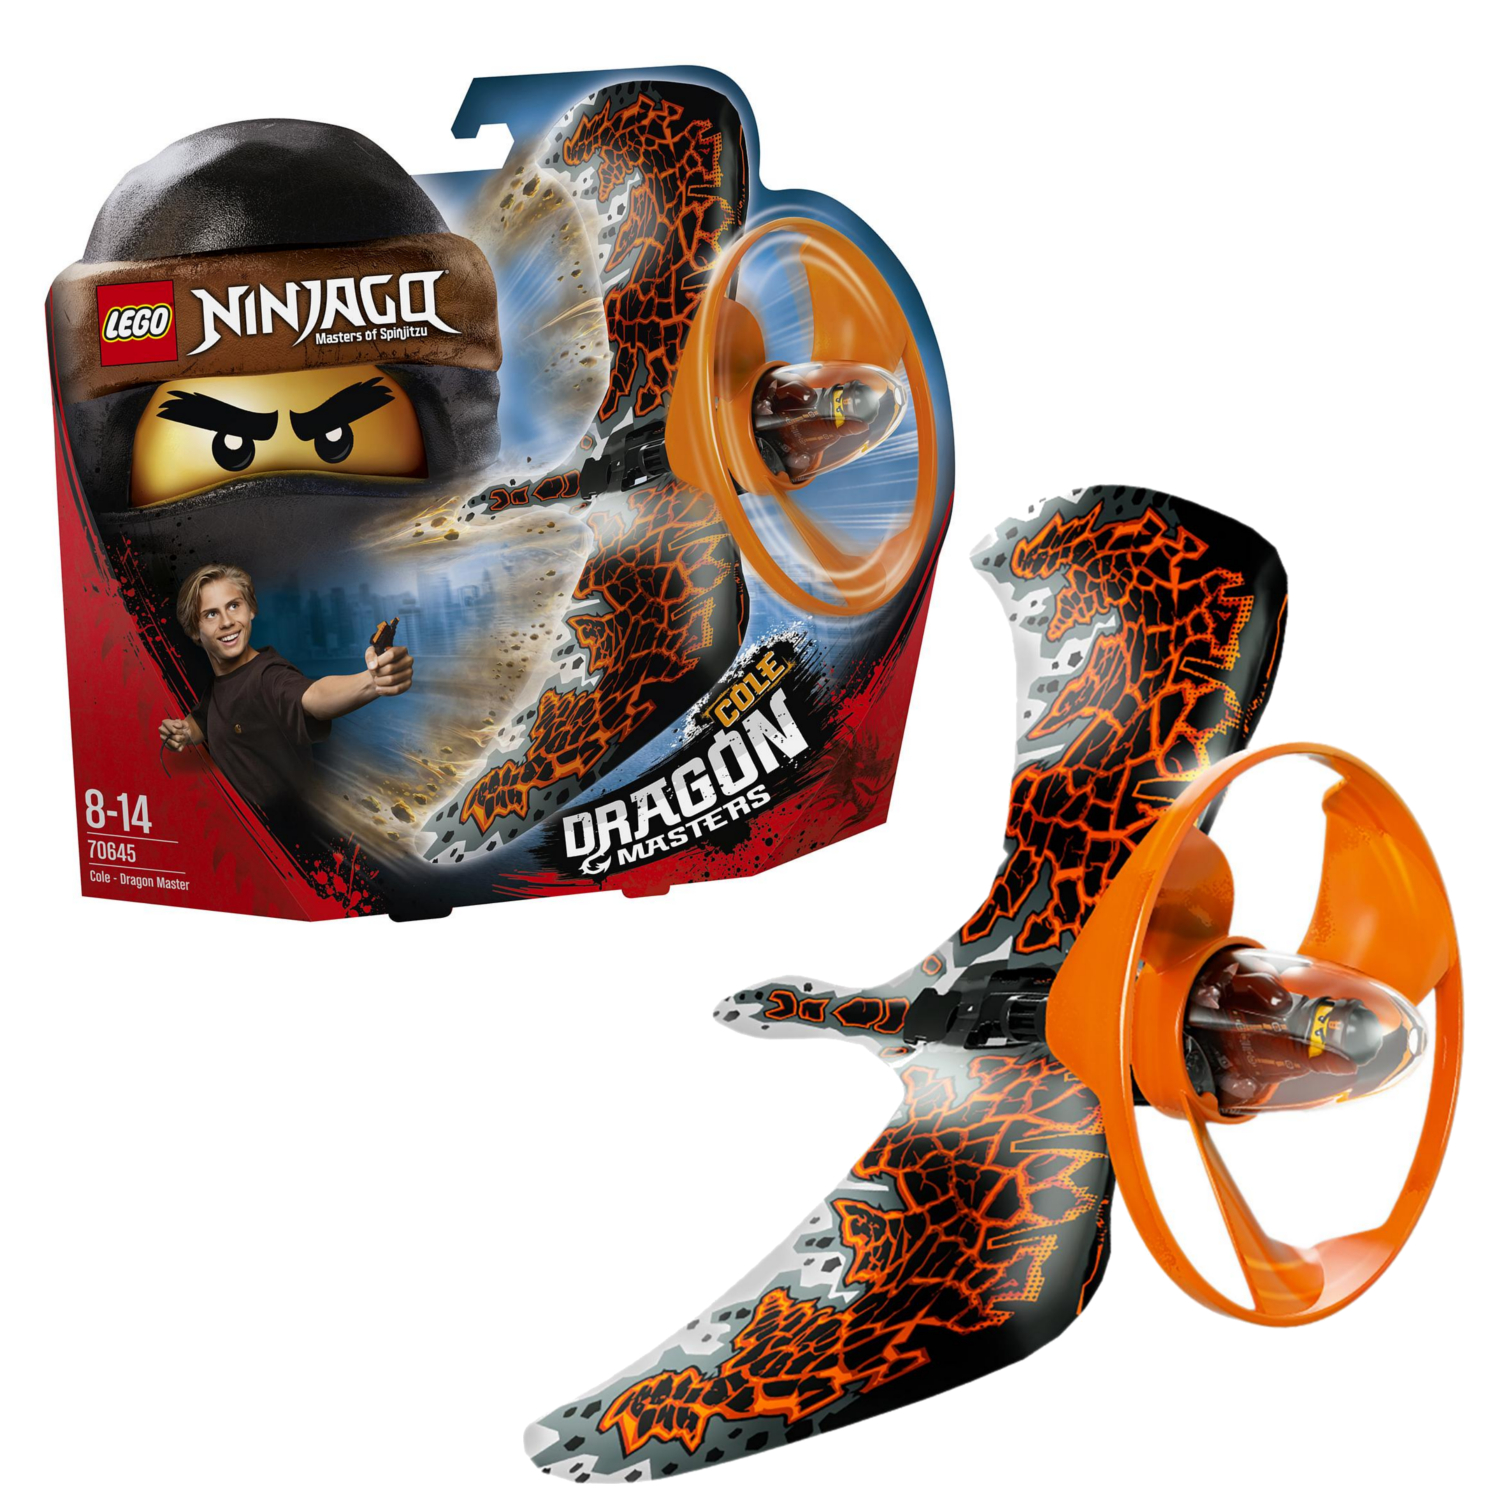 Lego Ninjago 70645 Коул Мастер дракона